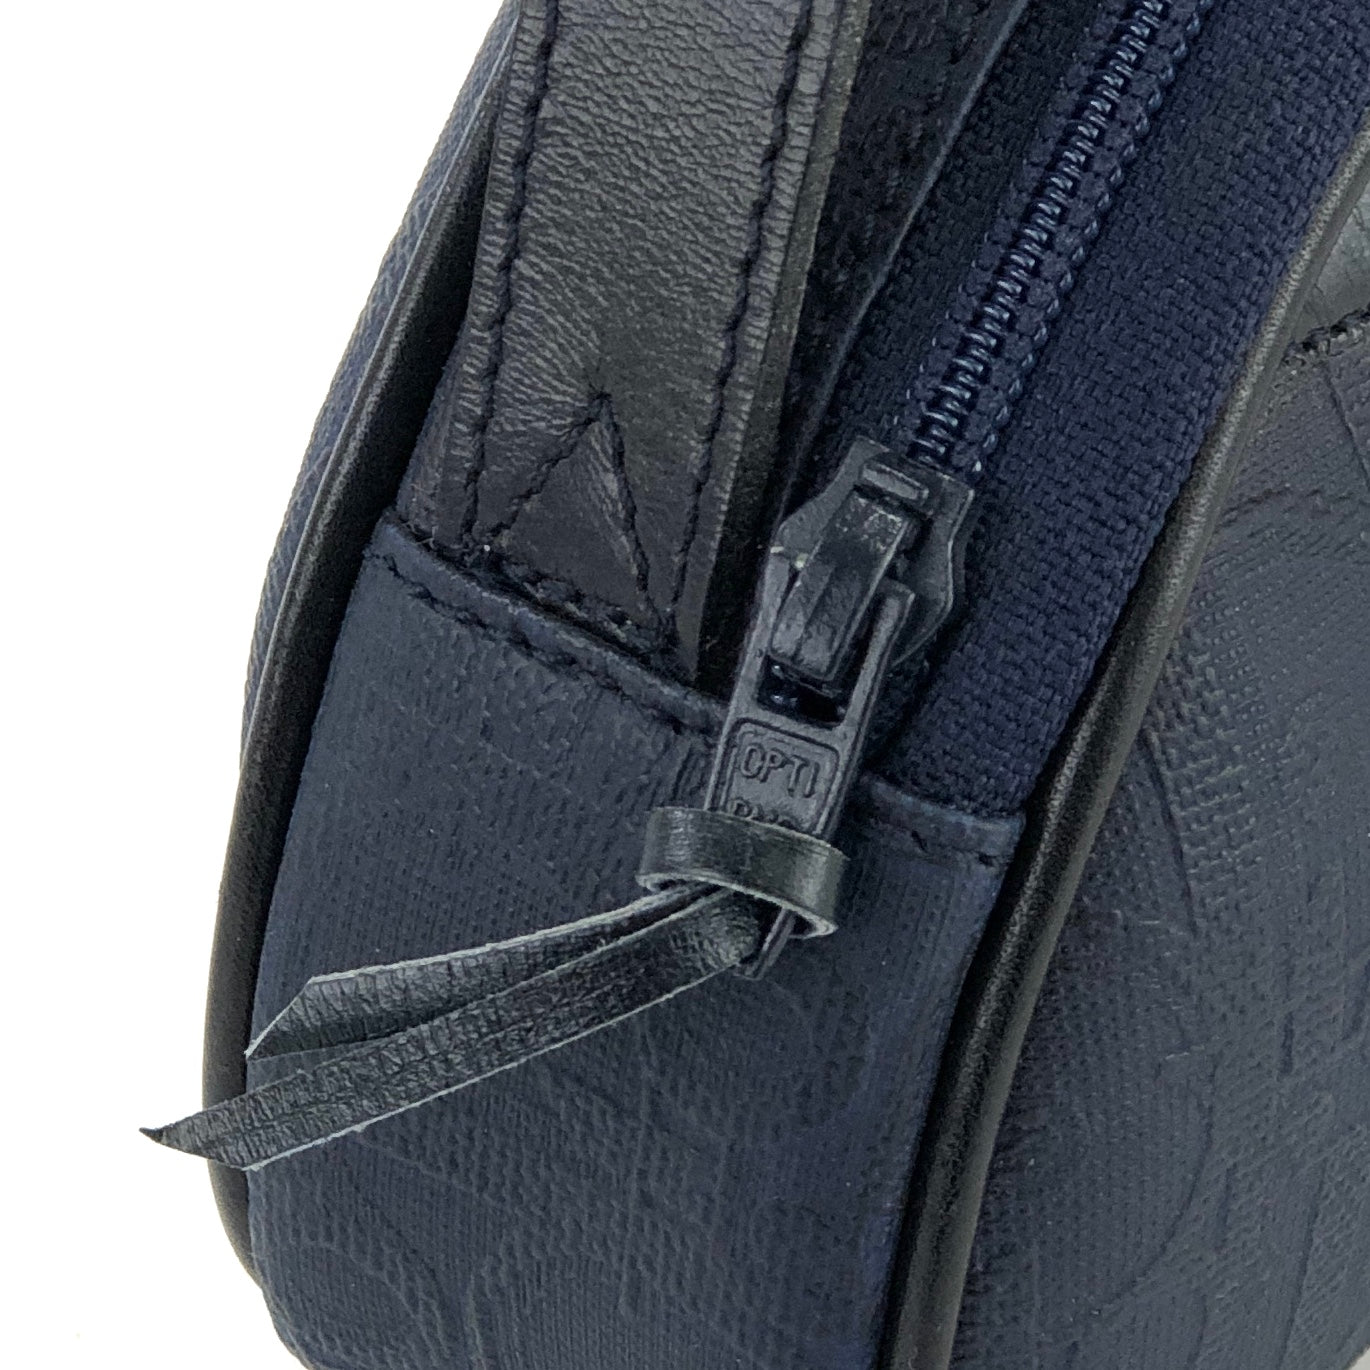 Christian Dior Trotter Oval Logo Motif PVC Leather Micro Mini Bag Handbag Hand Pouch Navy Vintage Old 6imutv